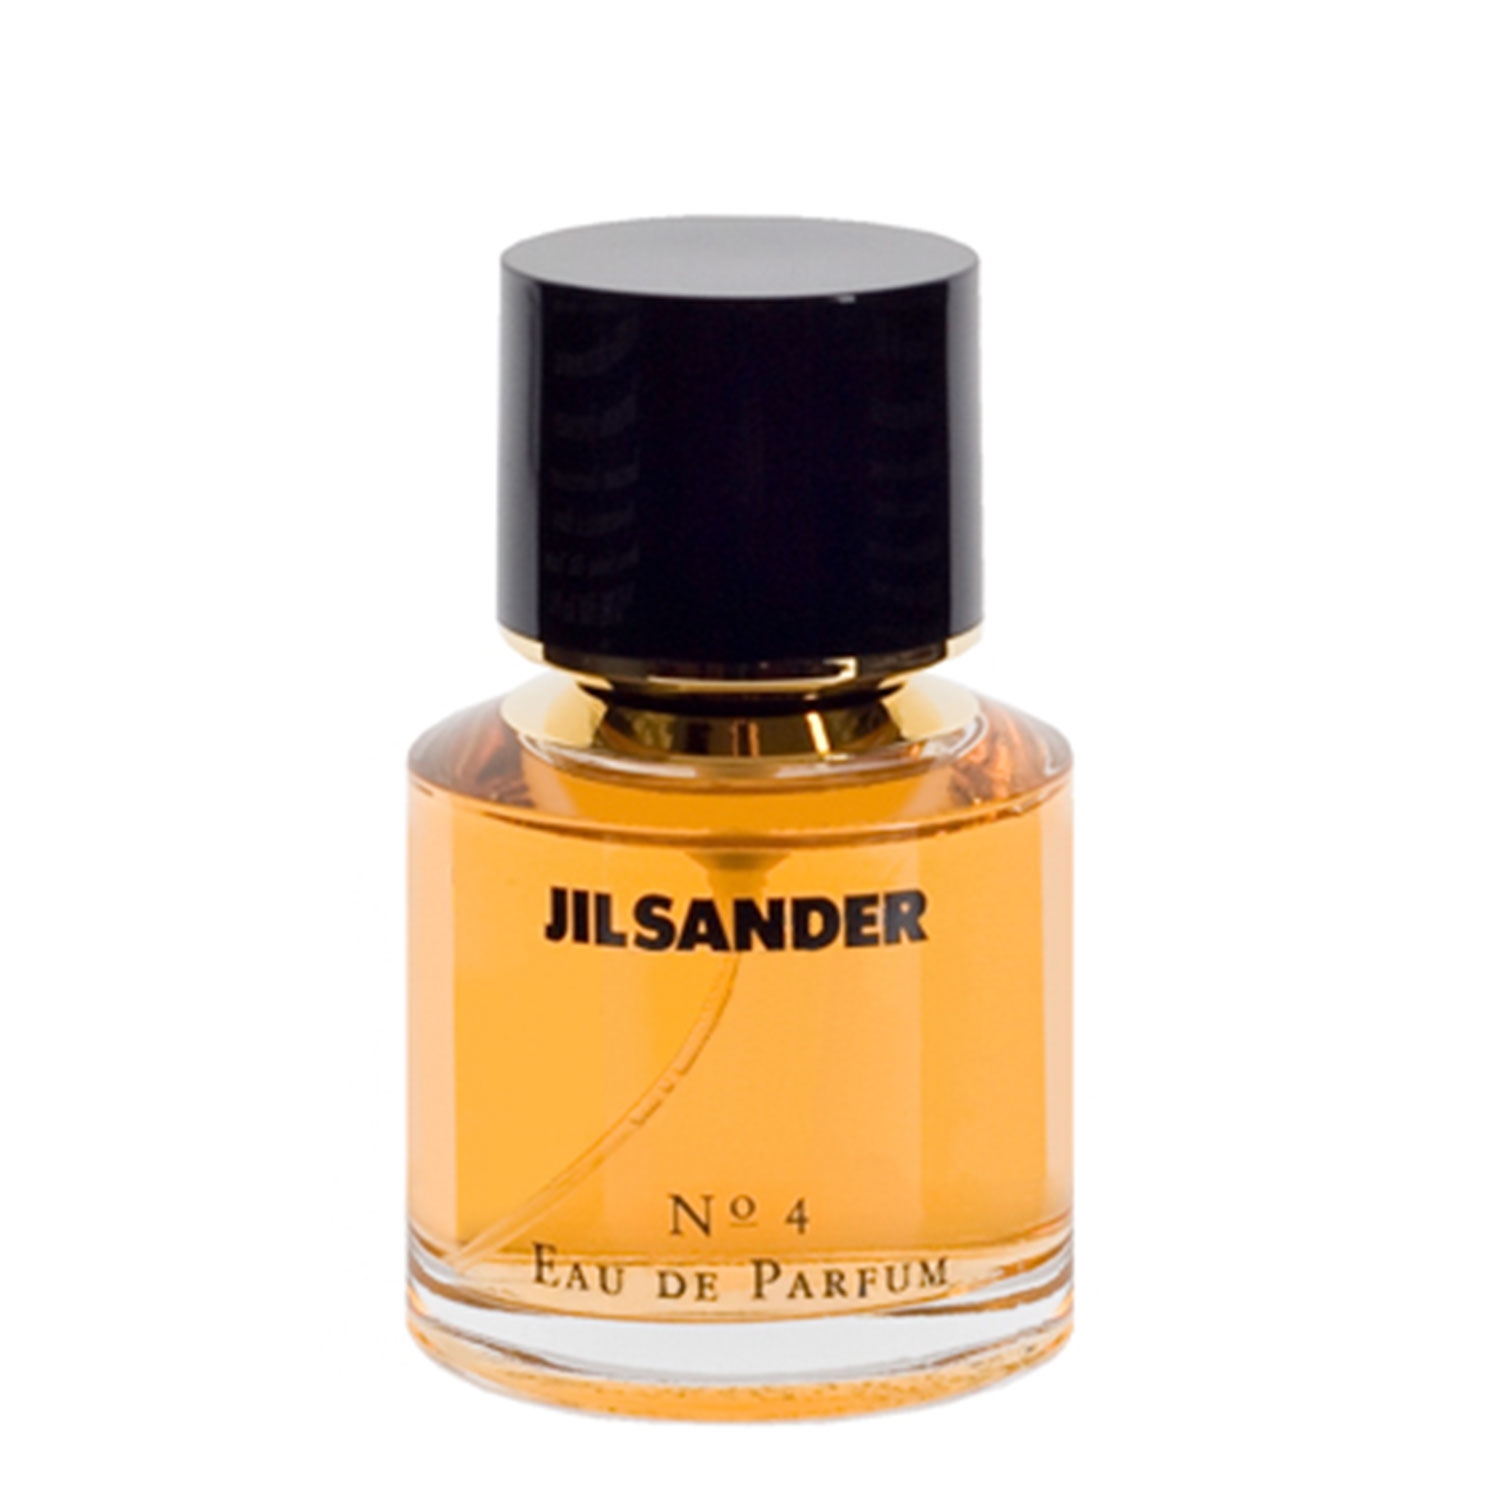 Produktbild von Jil Sander - N° 4 Eau de Parfum